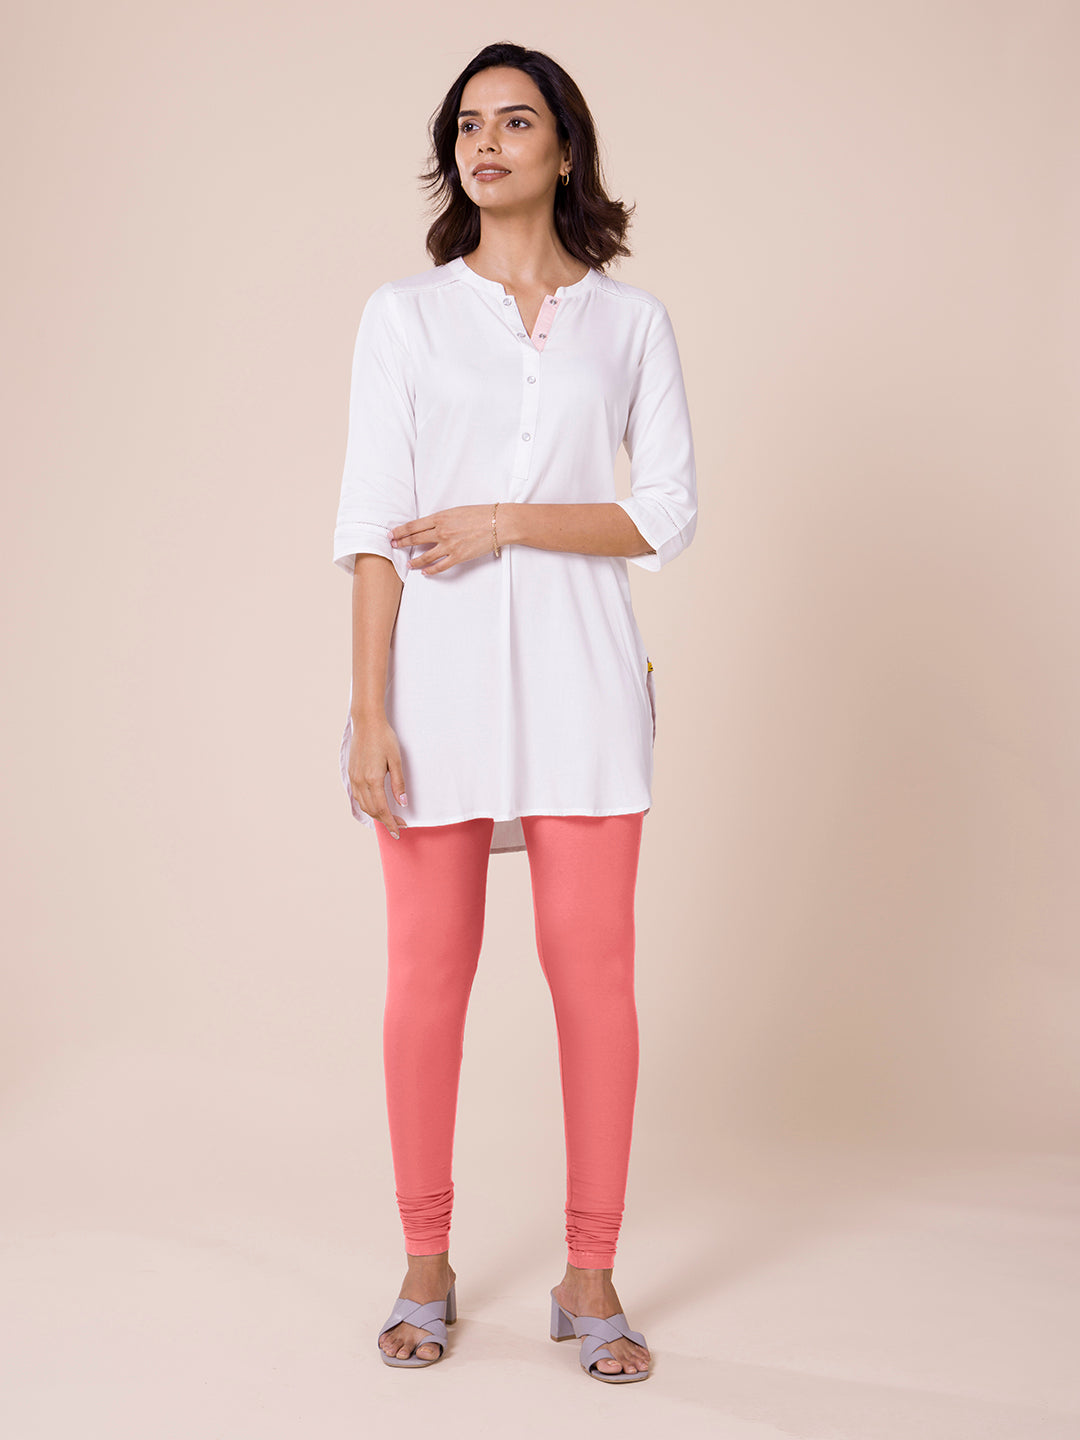 Go Colors Leggings : Buy Go Colors Women Solid Wheat Ankle Length Leggings  Online